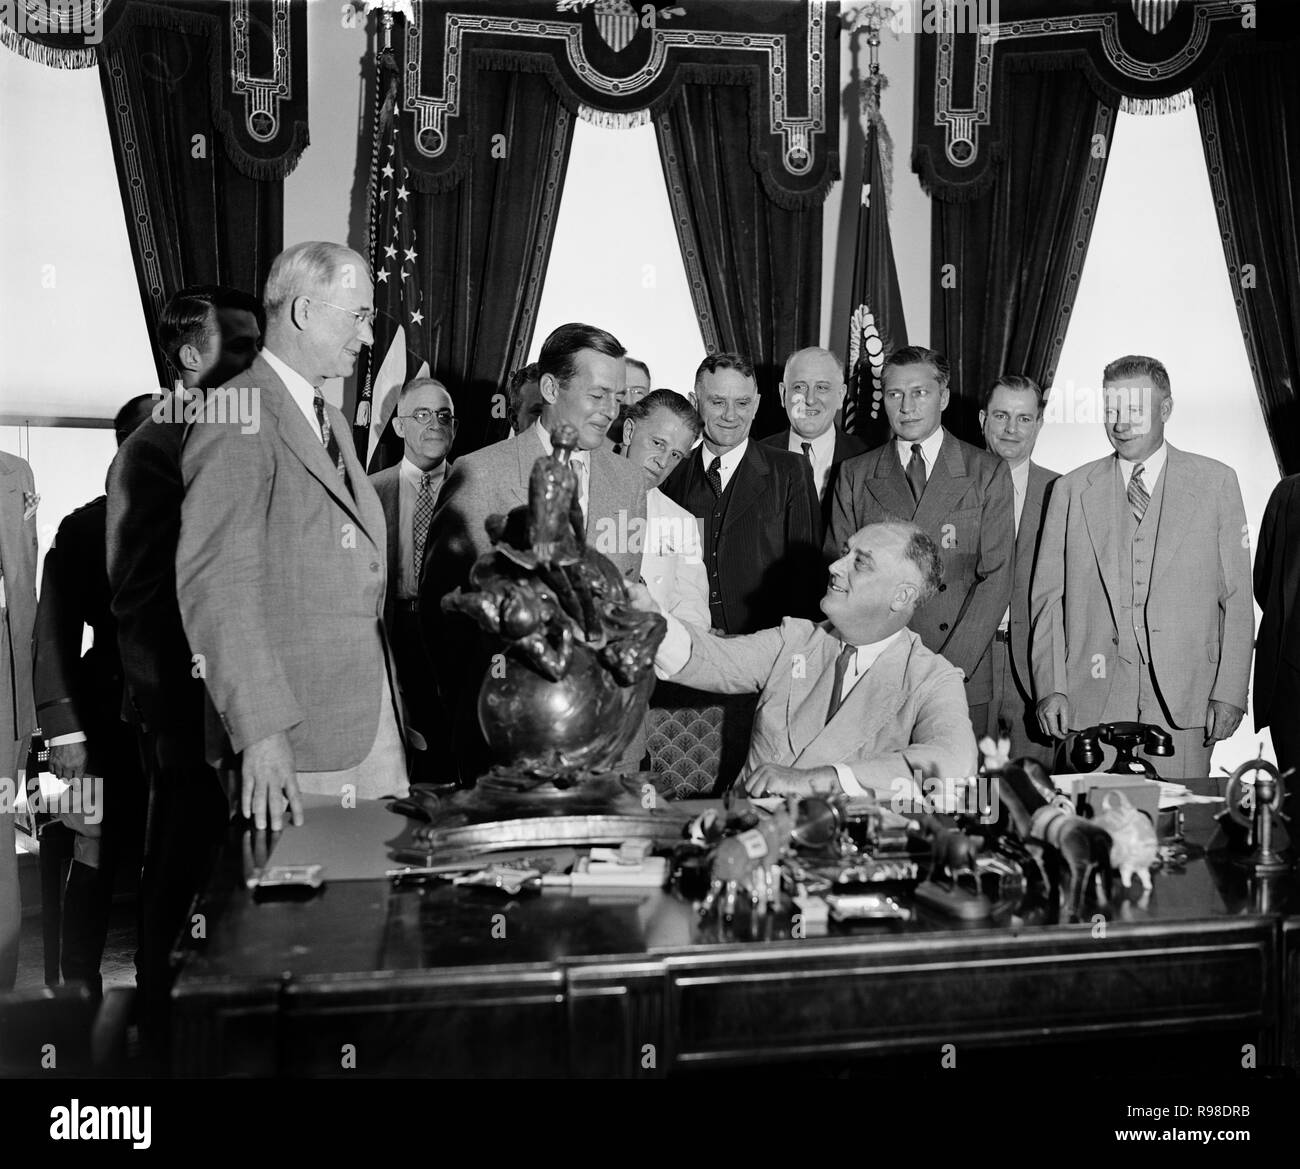 Us-Präsident Franklin Roosevelt präsentiert die Robert J. Collier Trophäe zu Donald W. Douglas und Douglas Aircraft Company Personal, White House, Washington DC, USA, 1. Juli 1936 Stockfoto